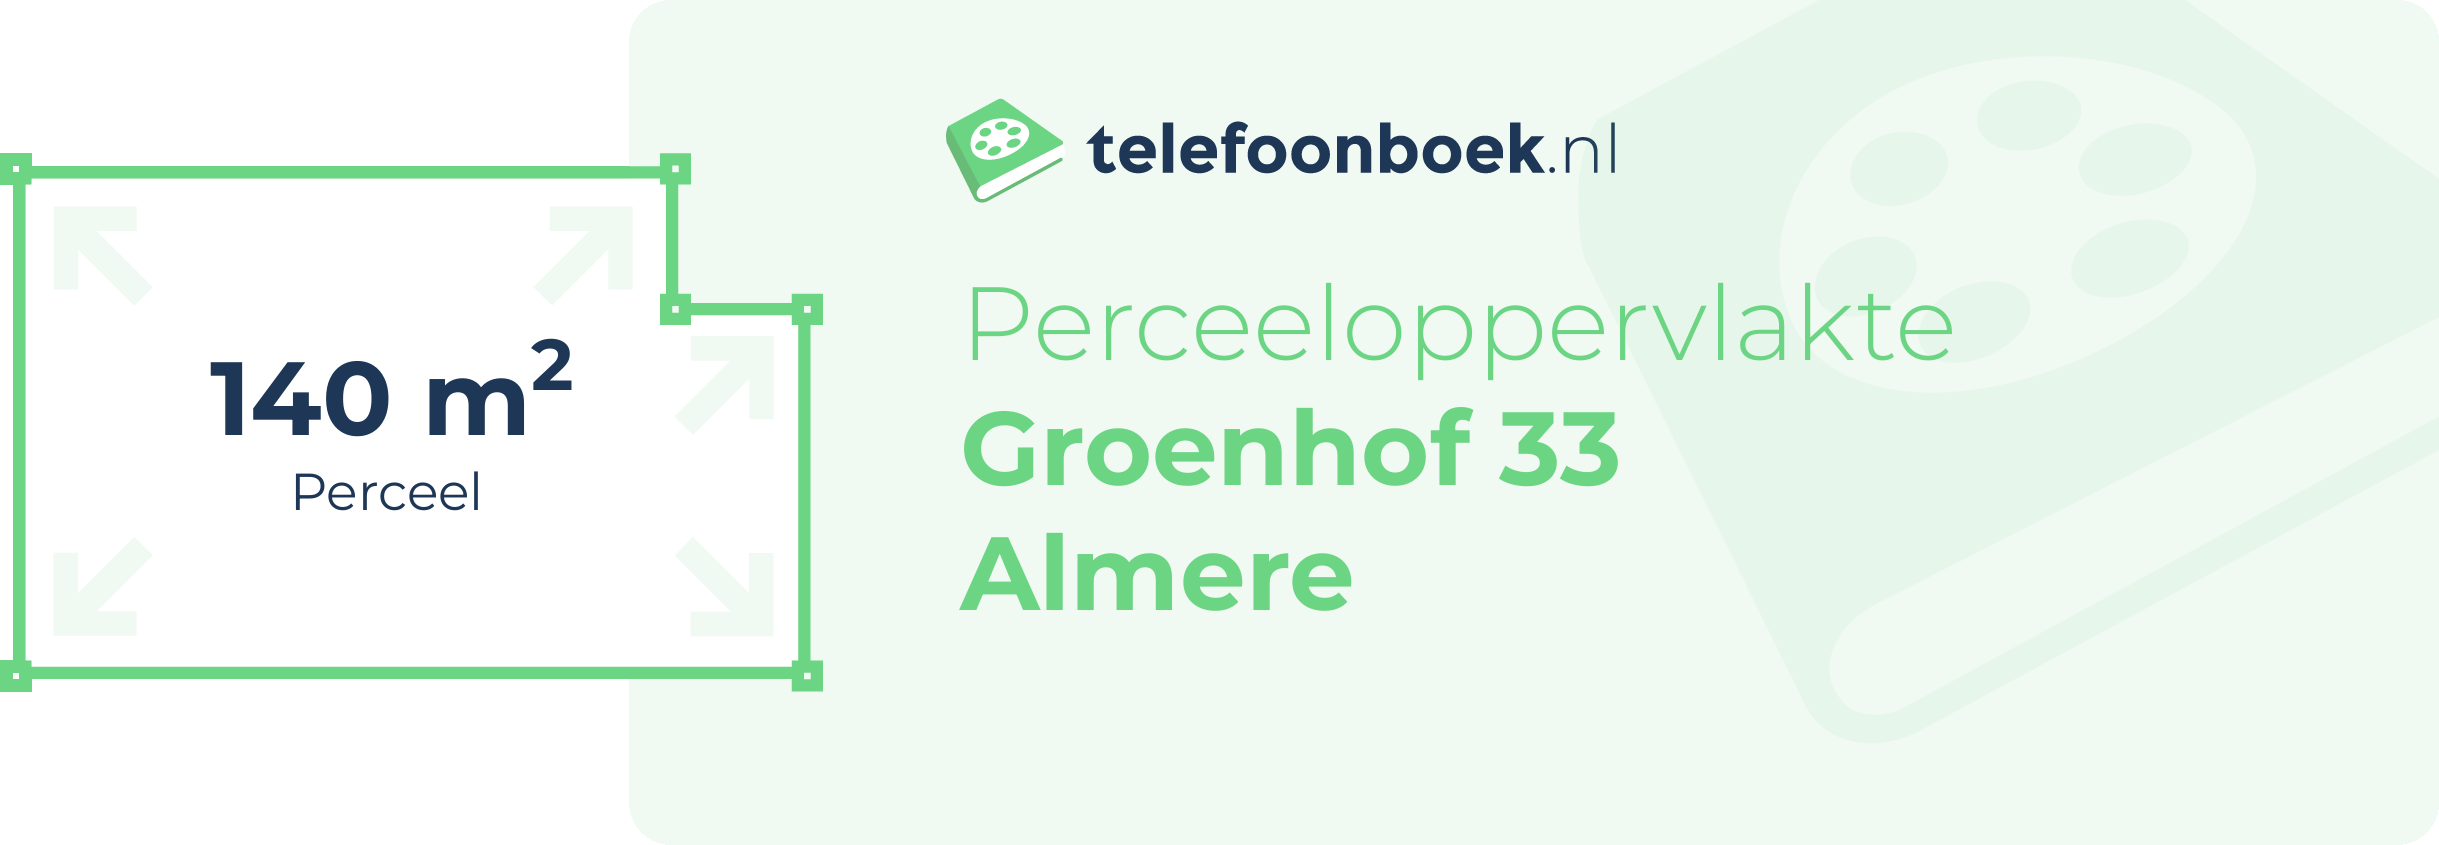 Perceeloppervlakte Groenhof 33 Almere